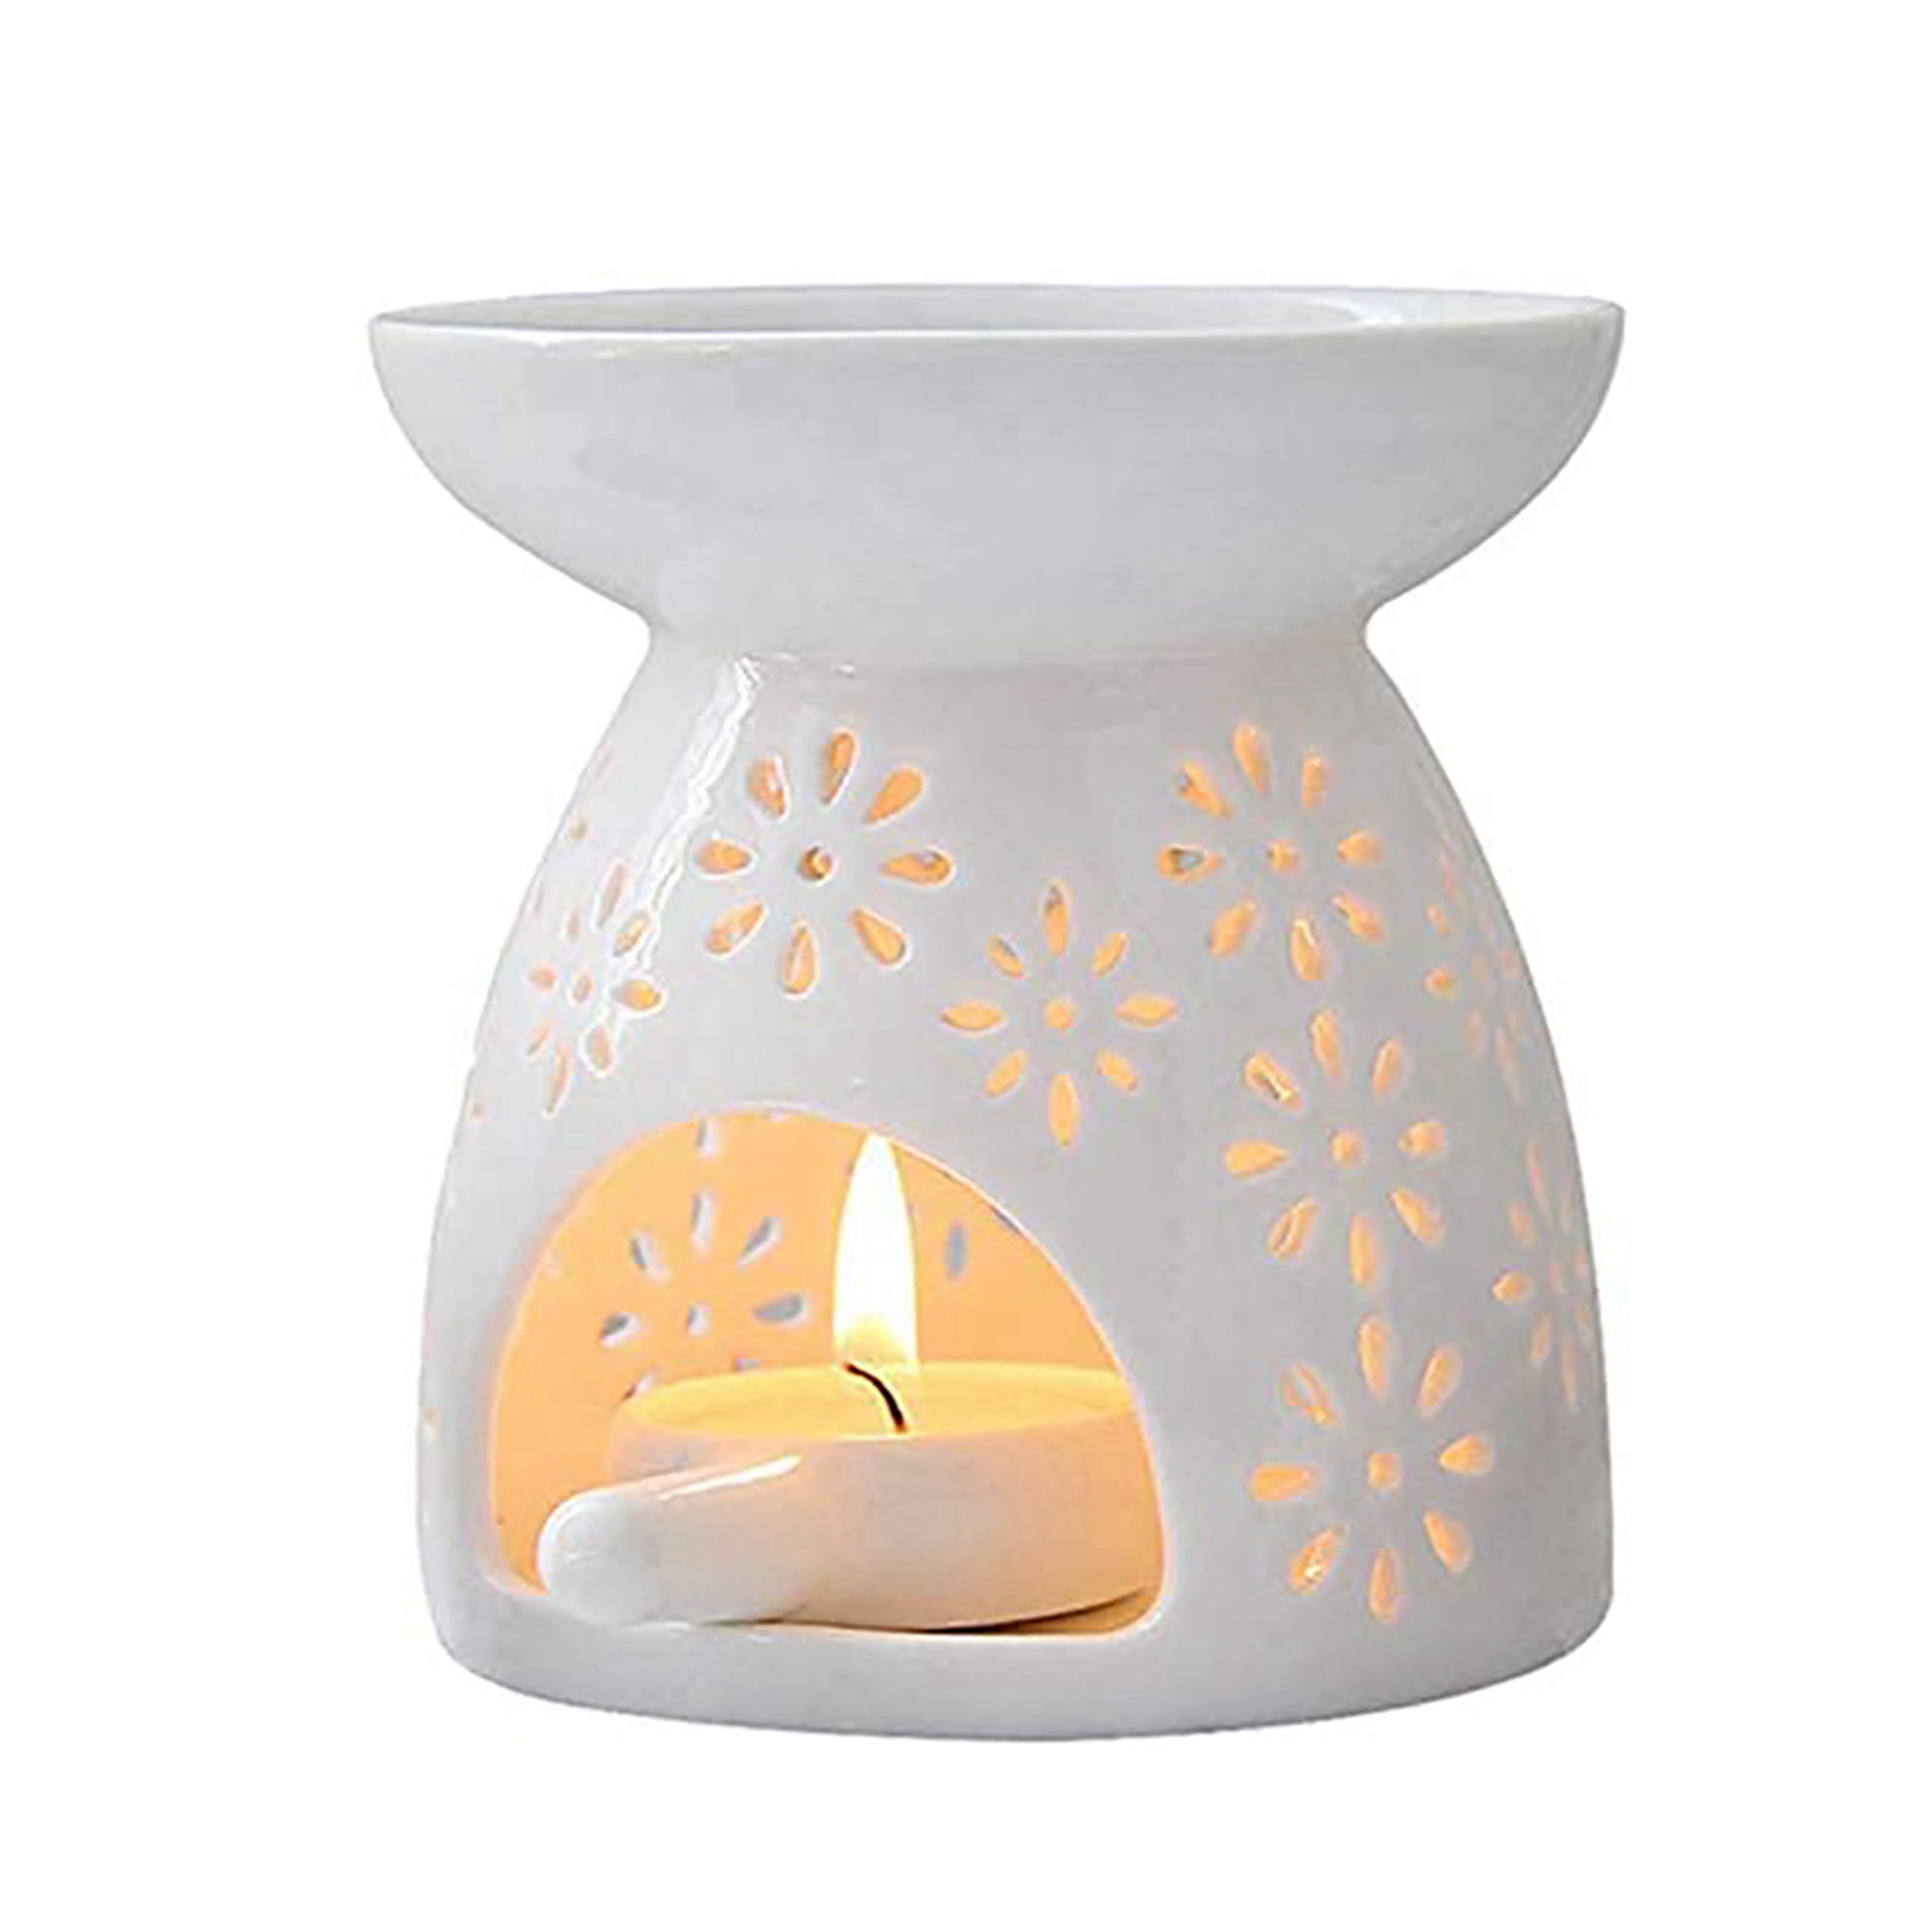 Ceramic Cactus Candle Burner Gift Set Oven Wax Tea Light Tealight Home Decor 